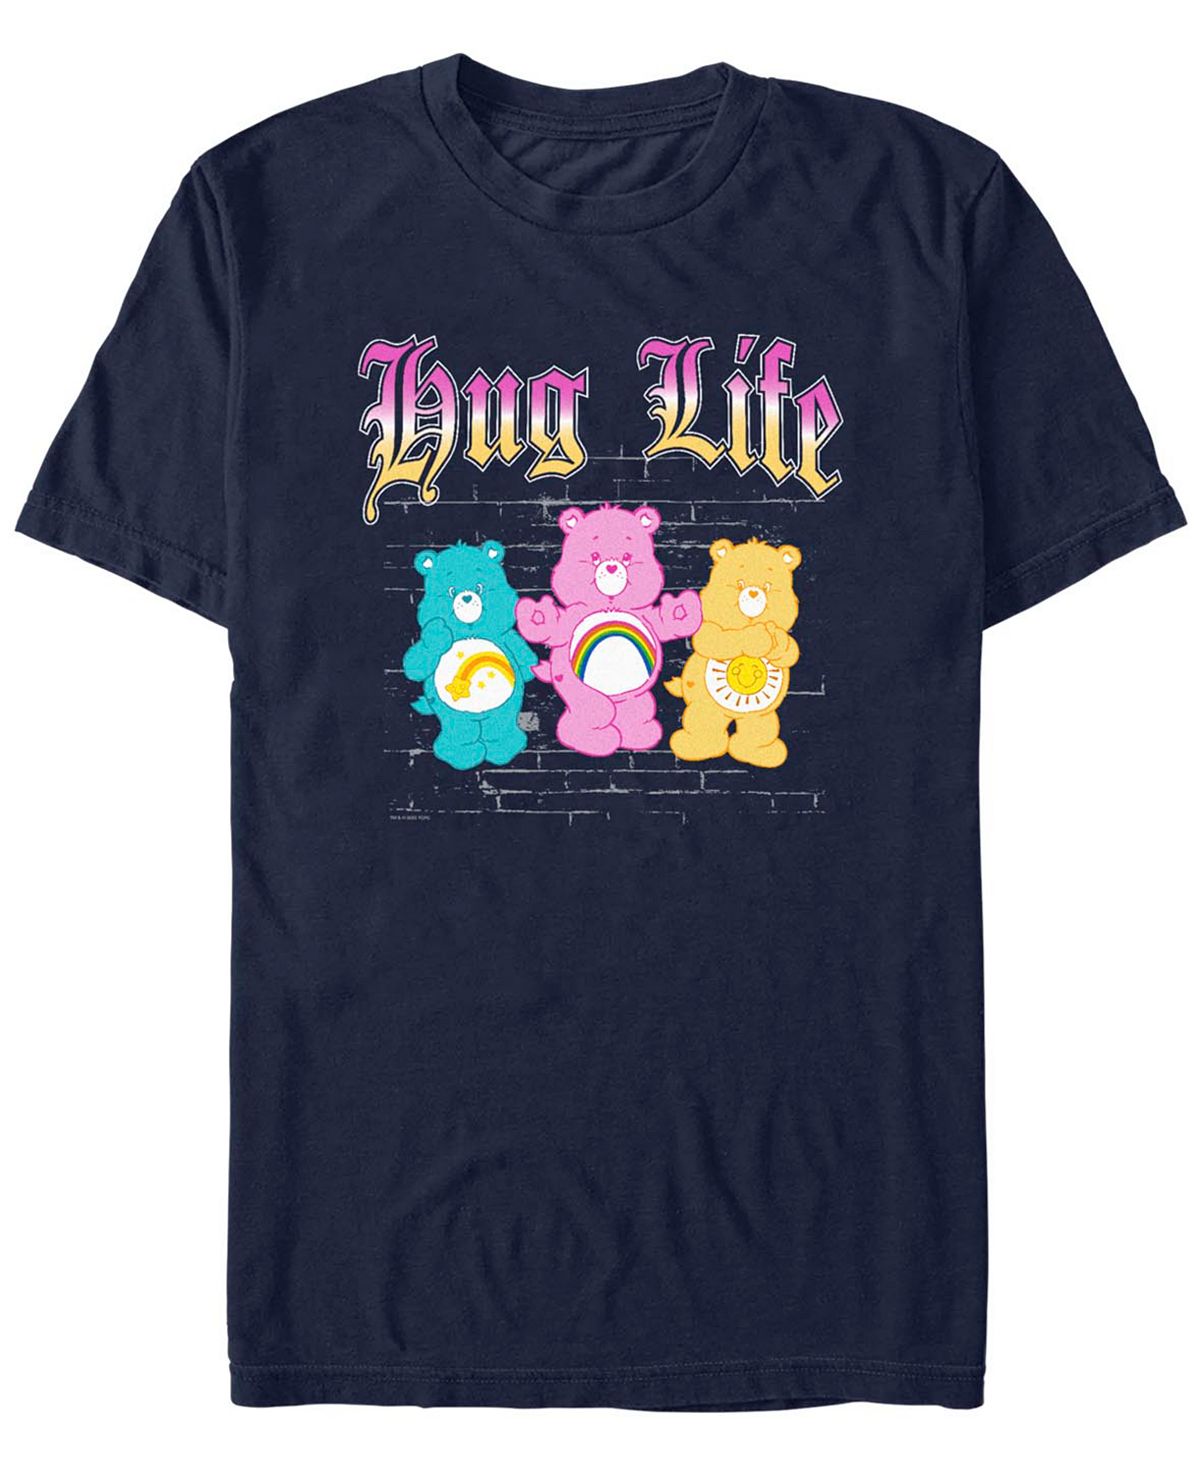 Мужская футболка с коротким рукавом care bears hug life Fifth Sun, синий